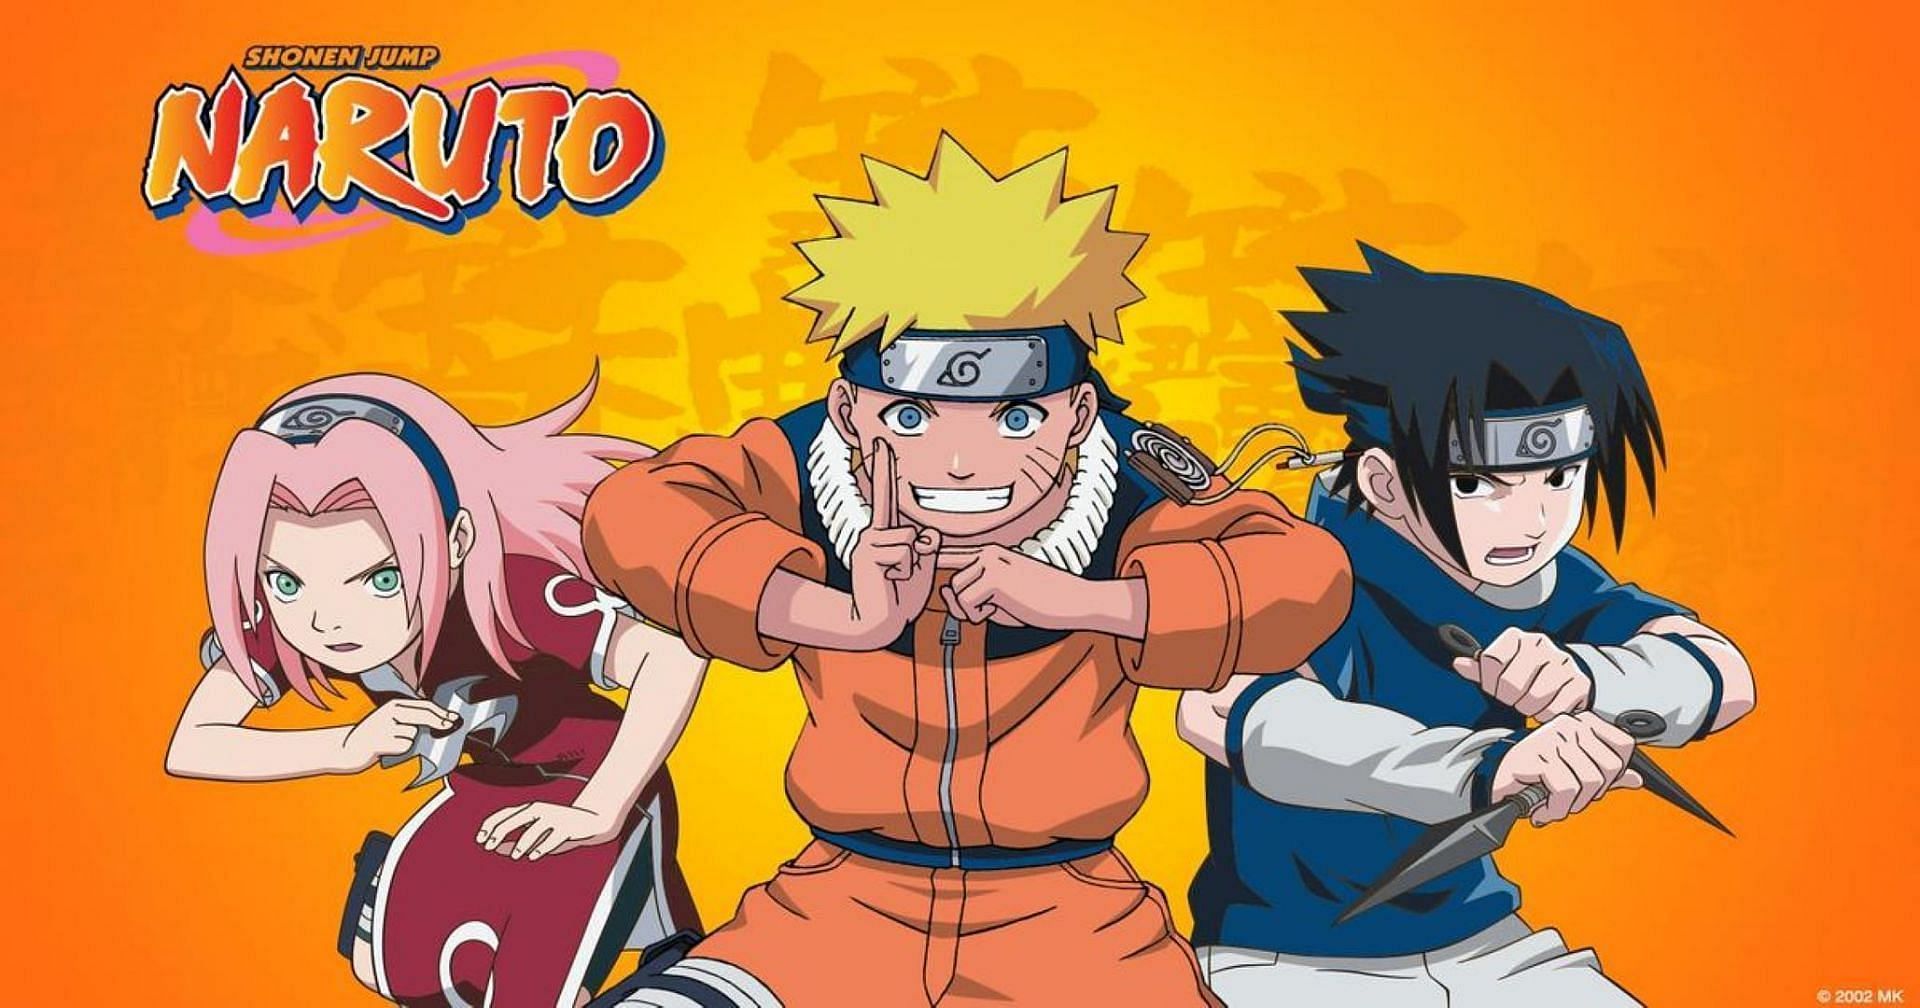 Naruto (Image via Studio Pierrot)